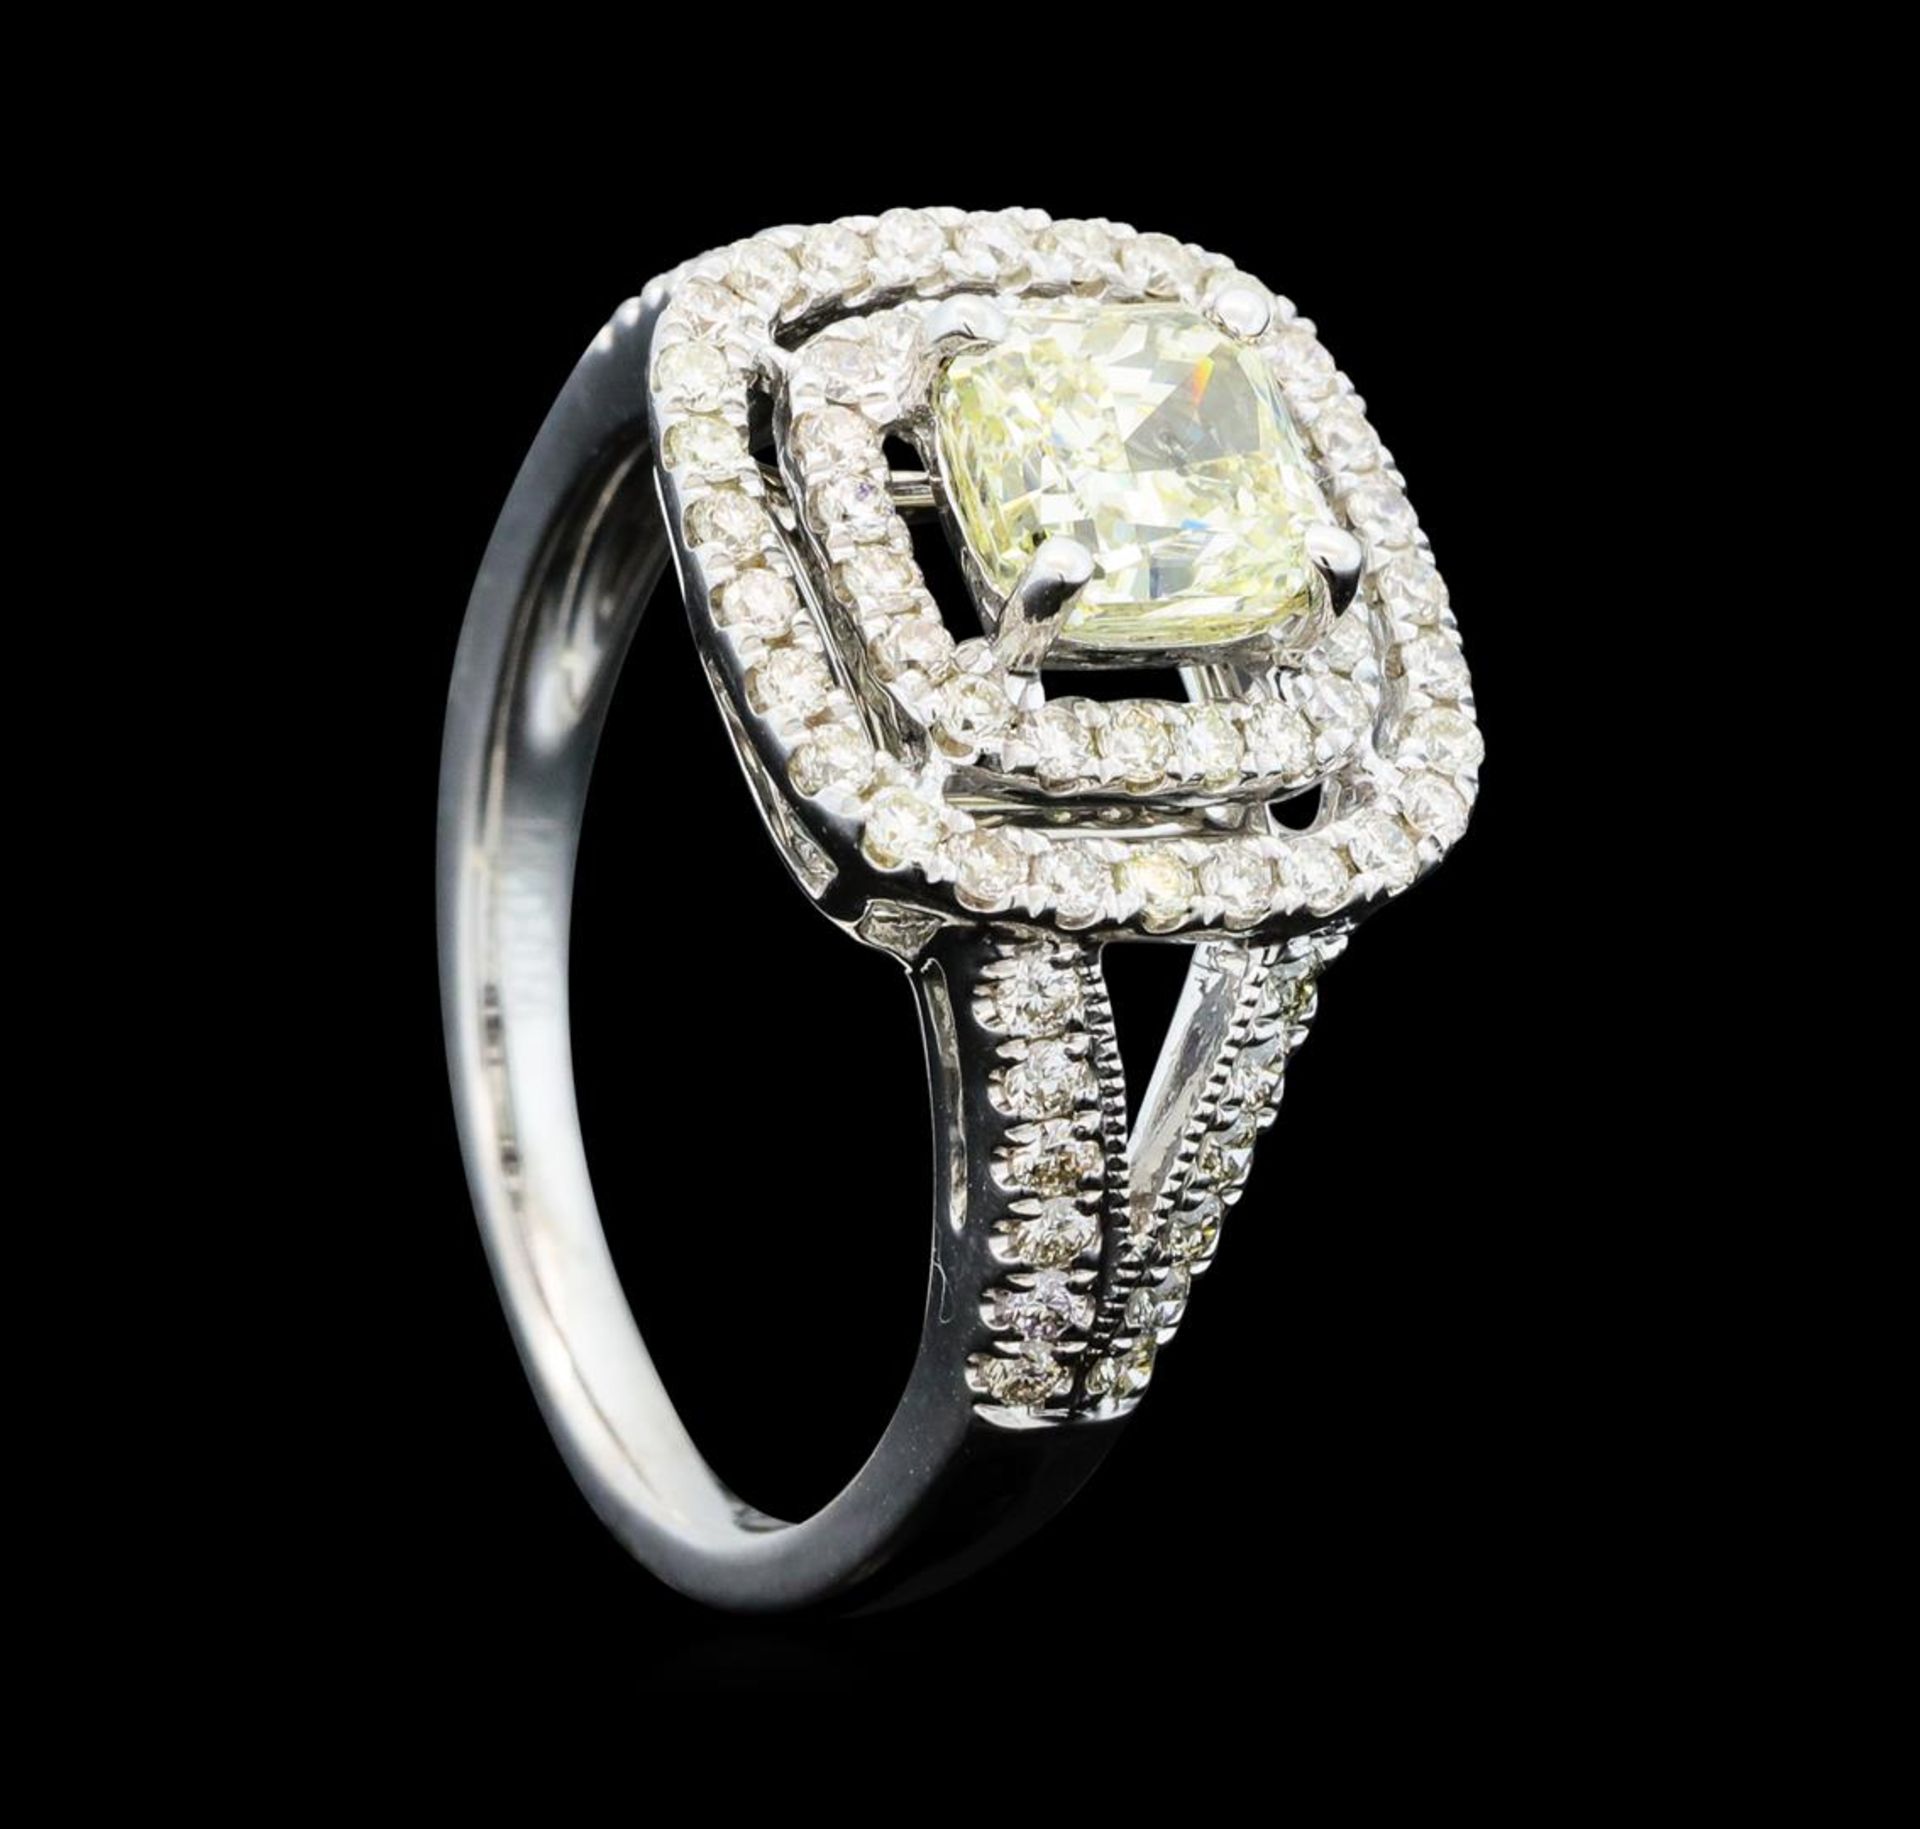 1.59 ctw Diamond Ring - 14KT White Gold - Image 4 of 5